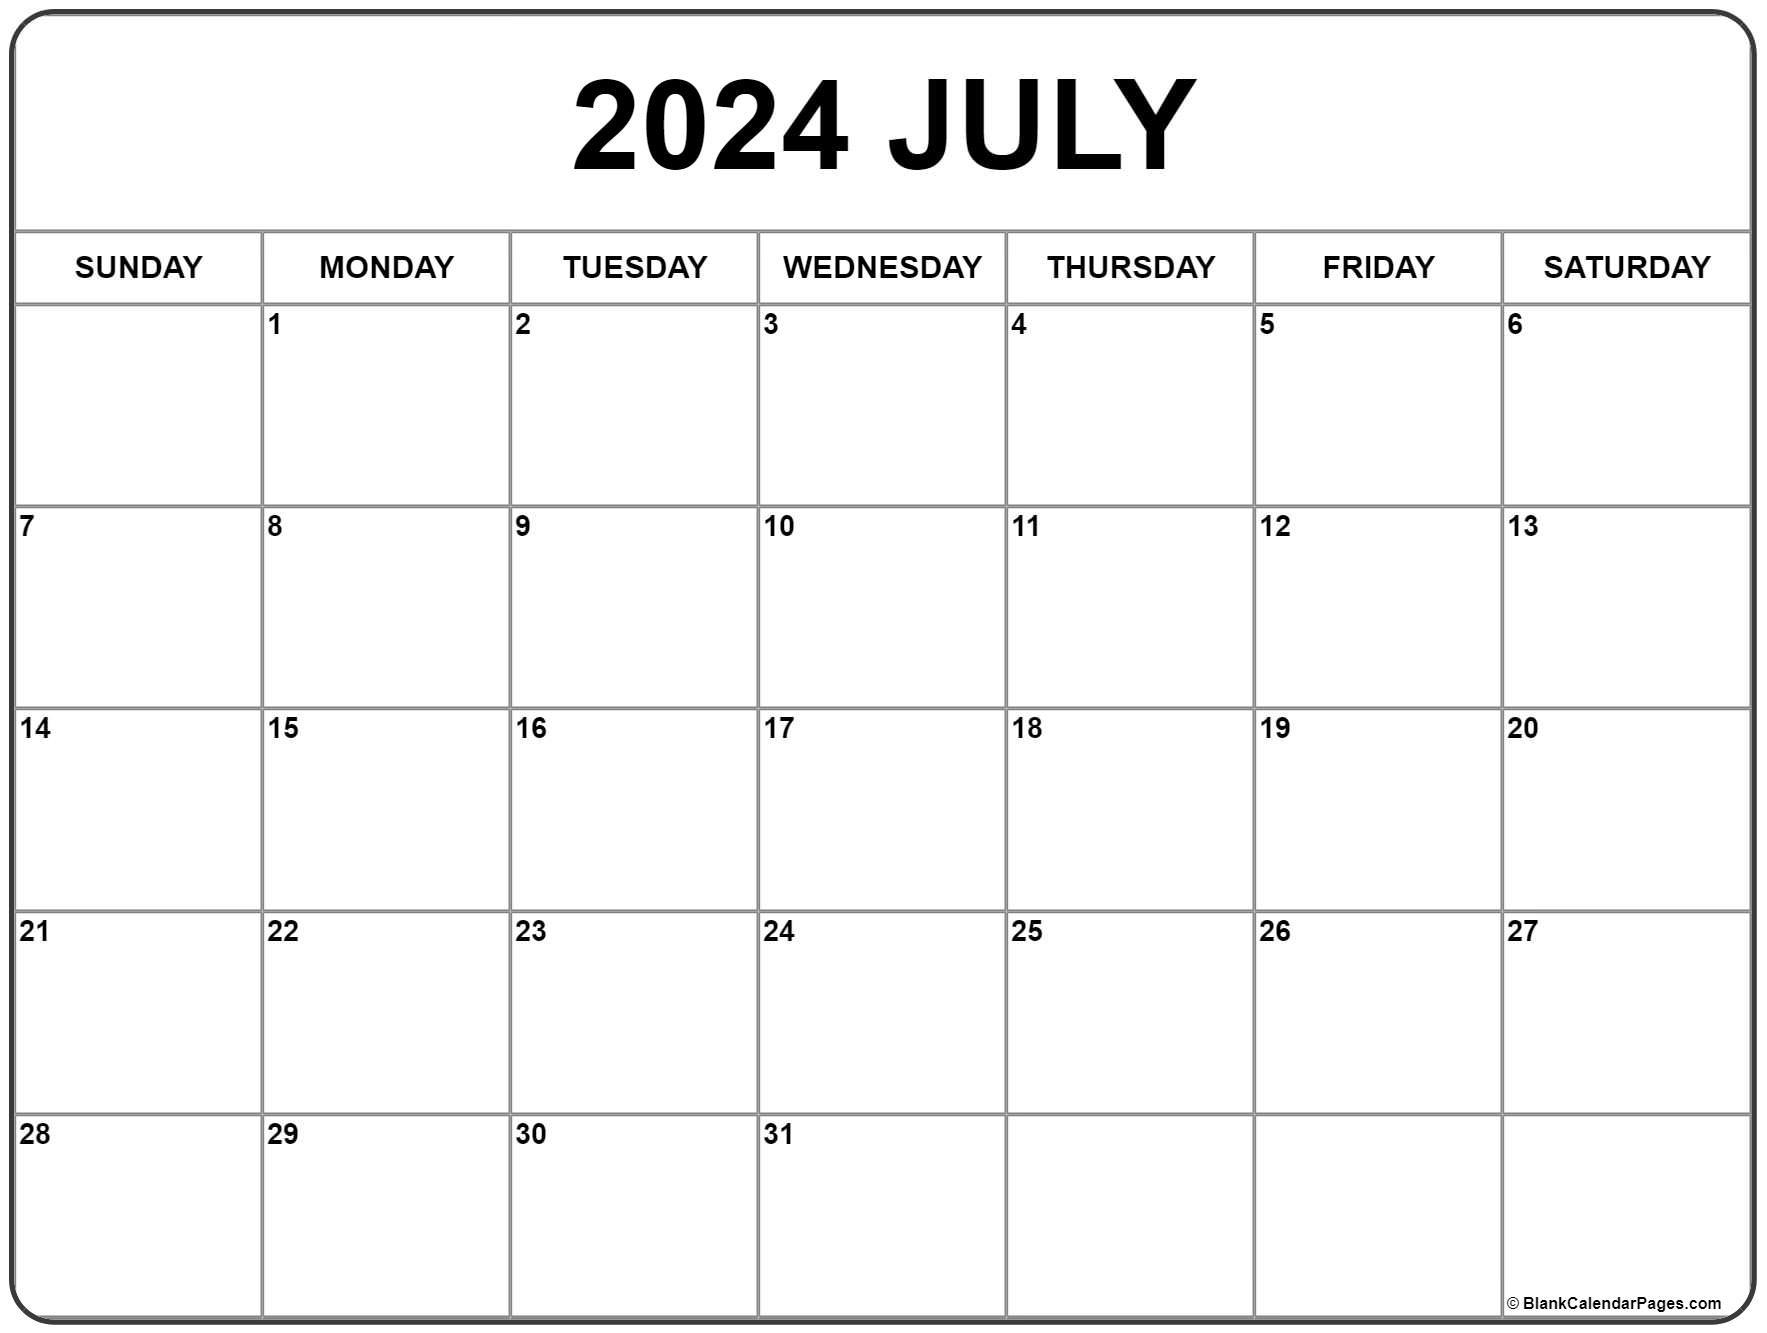 July 2024 Calendar | Free Printable Calendar in Blank Calendar 2024 July